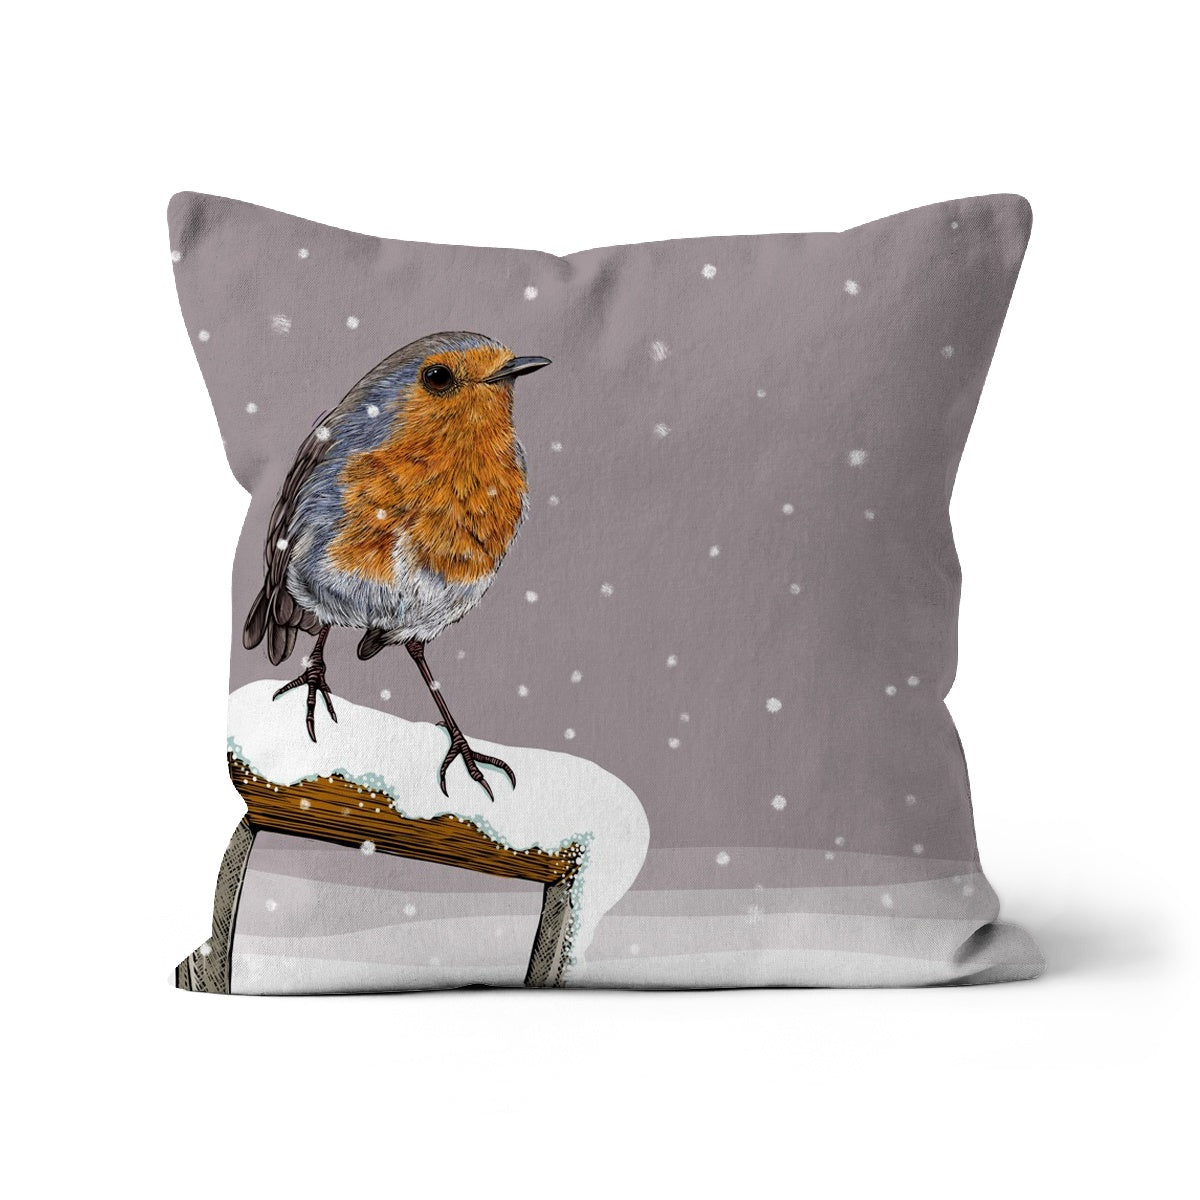 Robin cushion by Fox and Boo